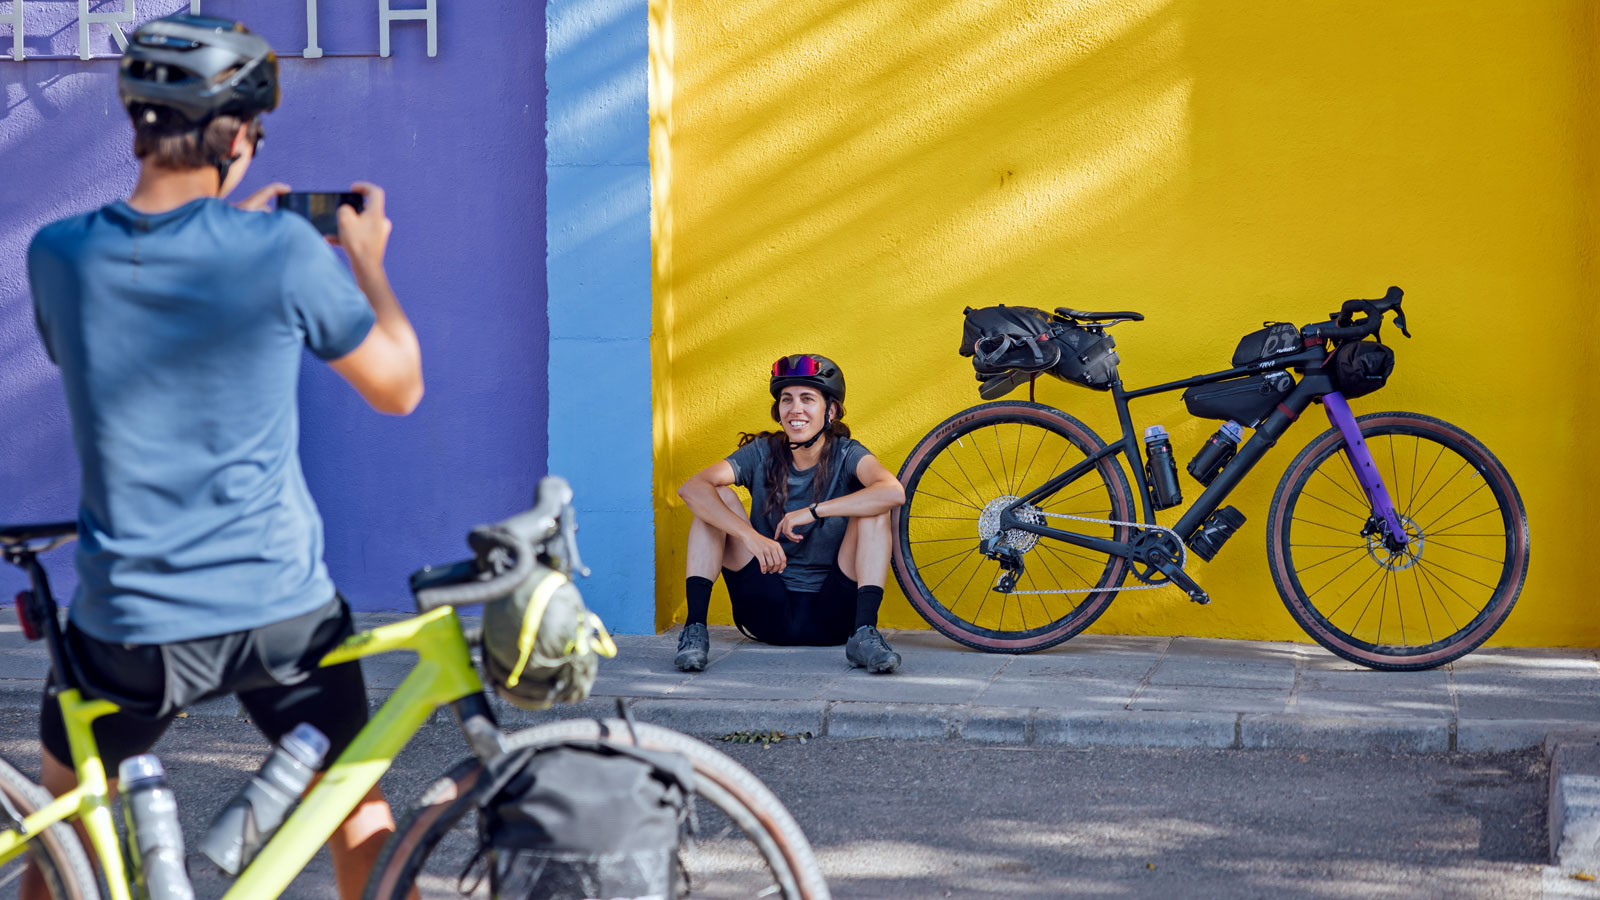 Wilier Adlar lightweight carbon bikepacking gravel touring bike, choose your own adventure